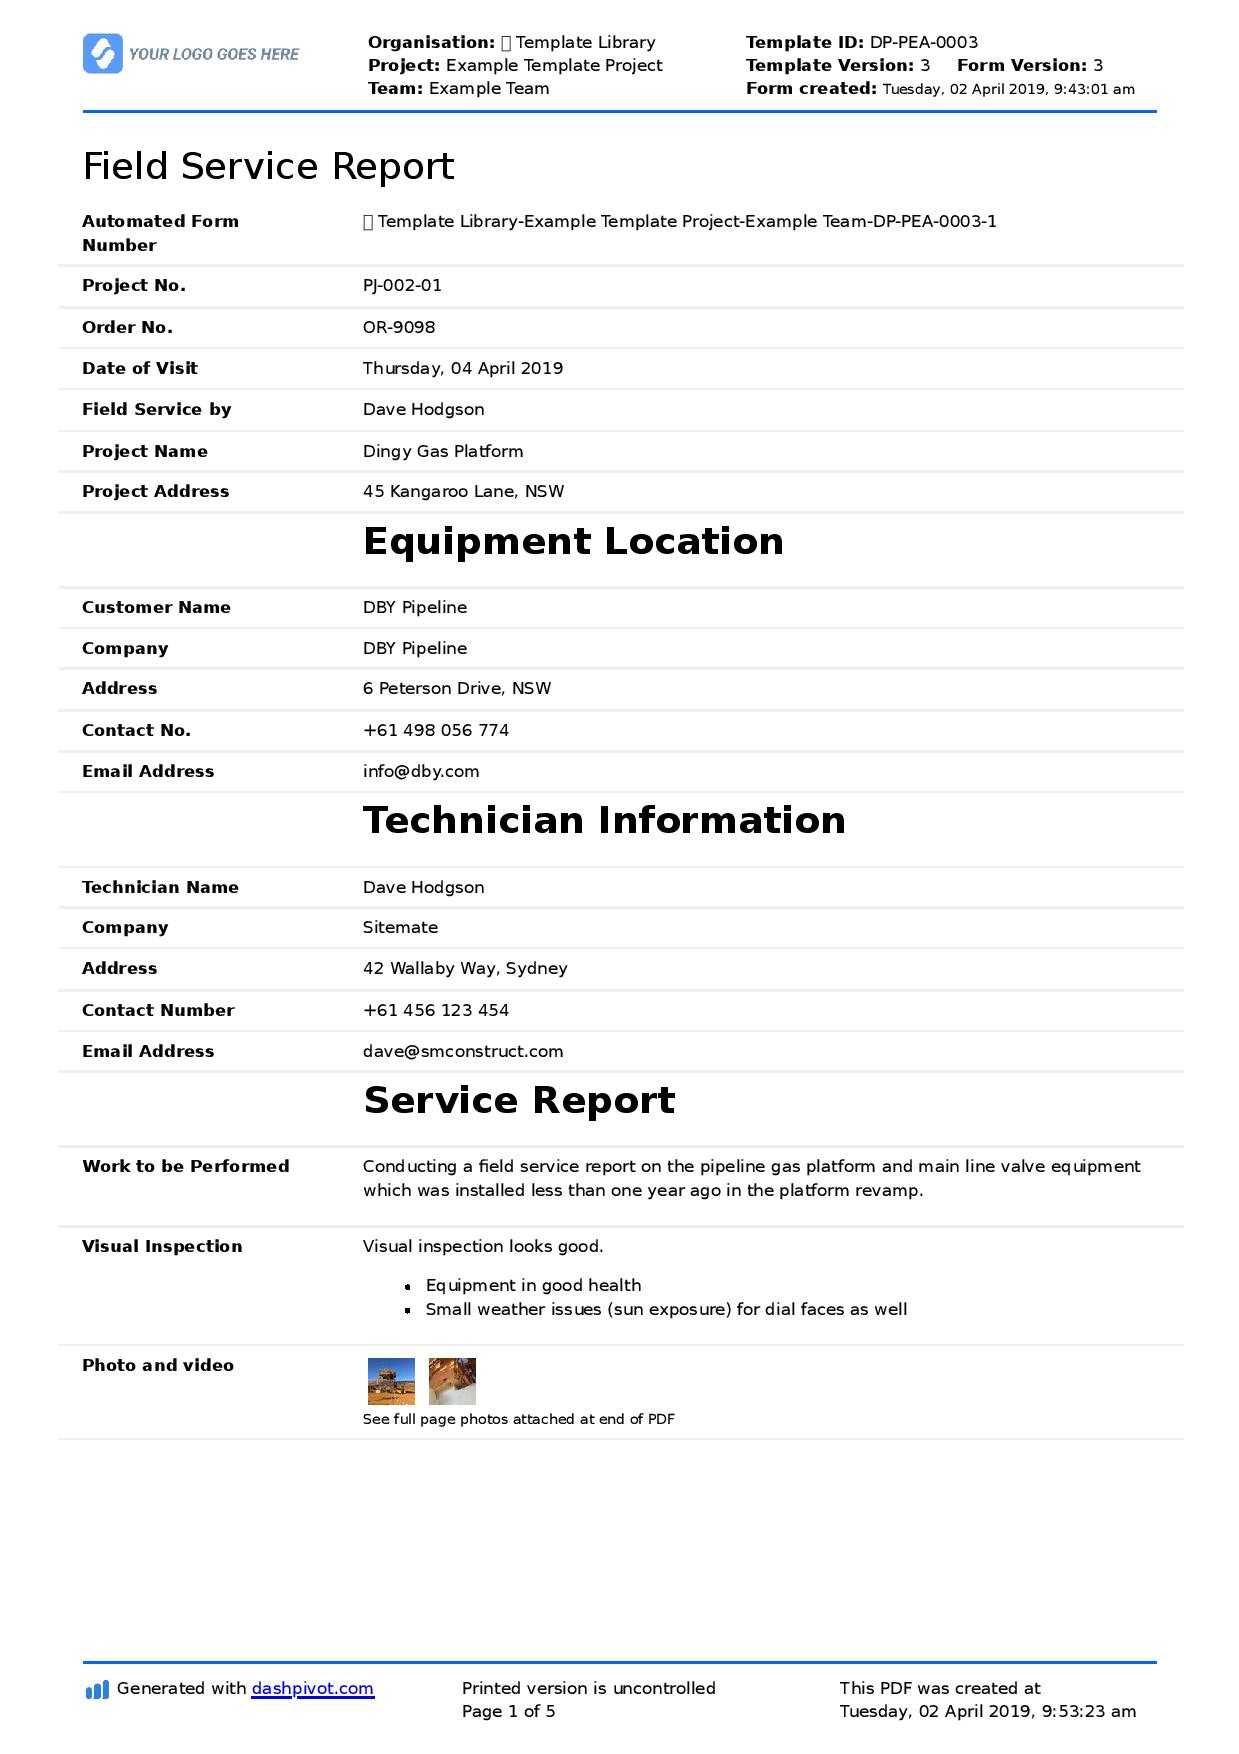 Field Service Report Template (Better Format Than Word For Technical Service Report Template